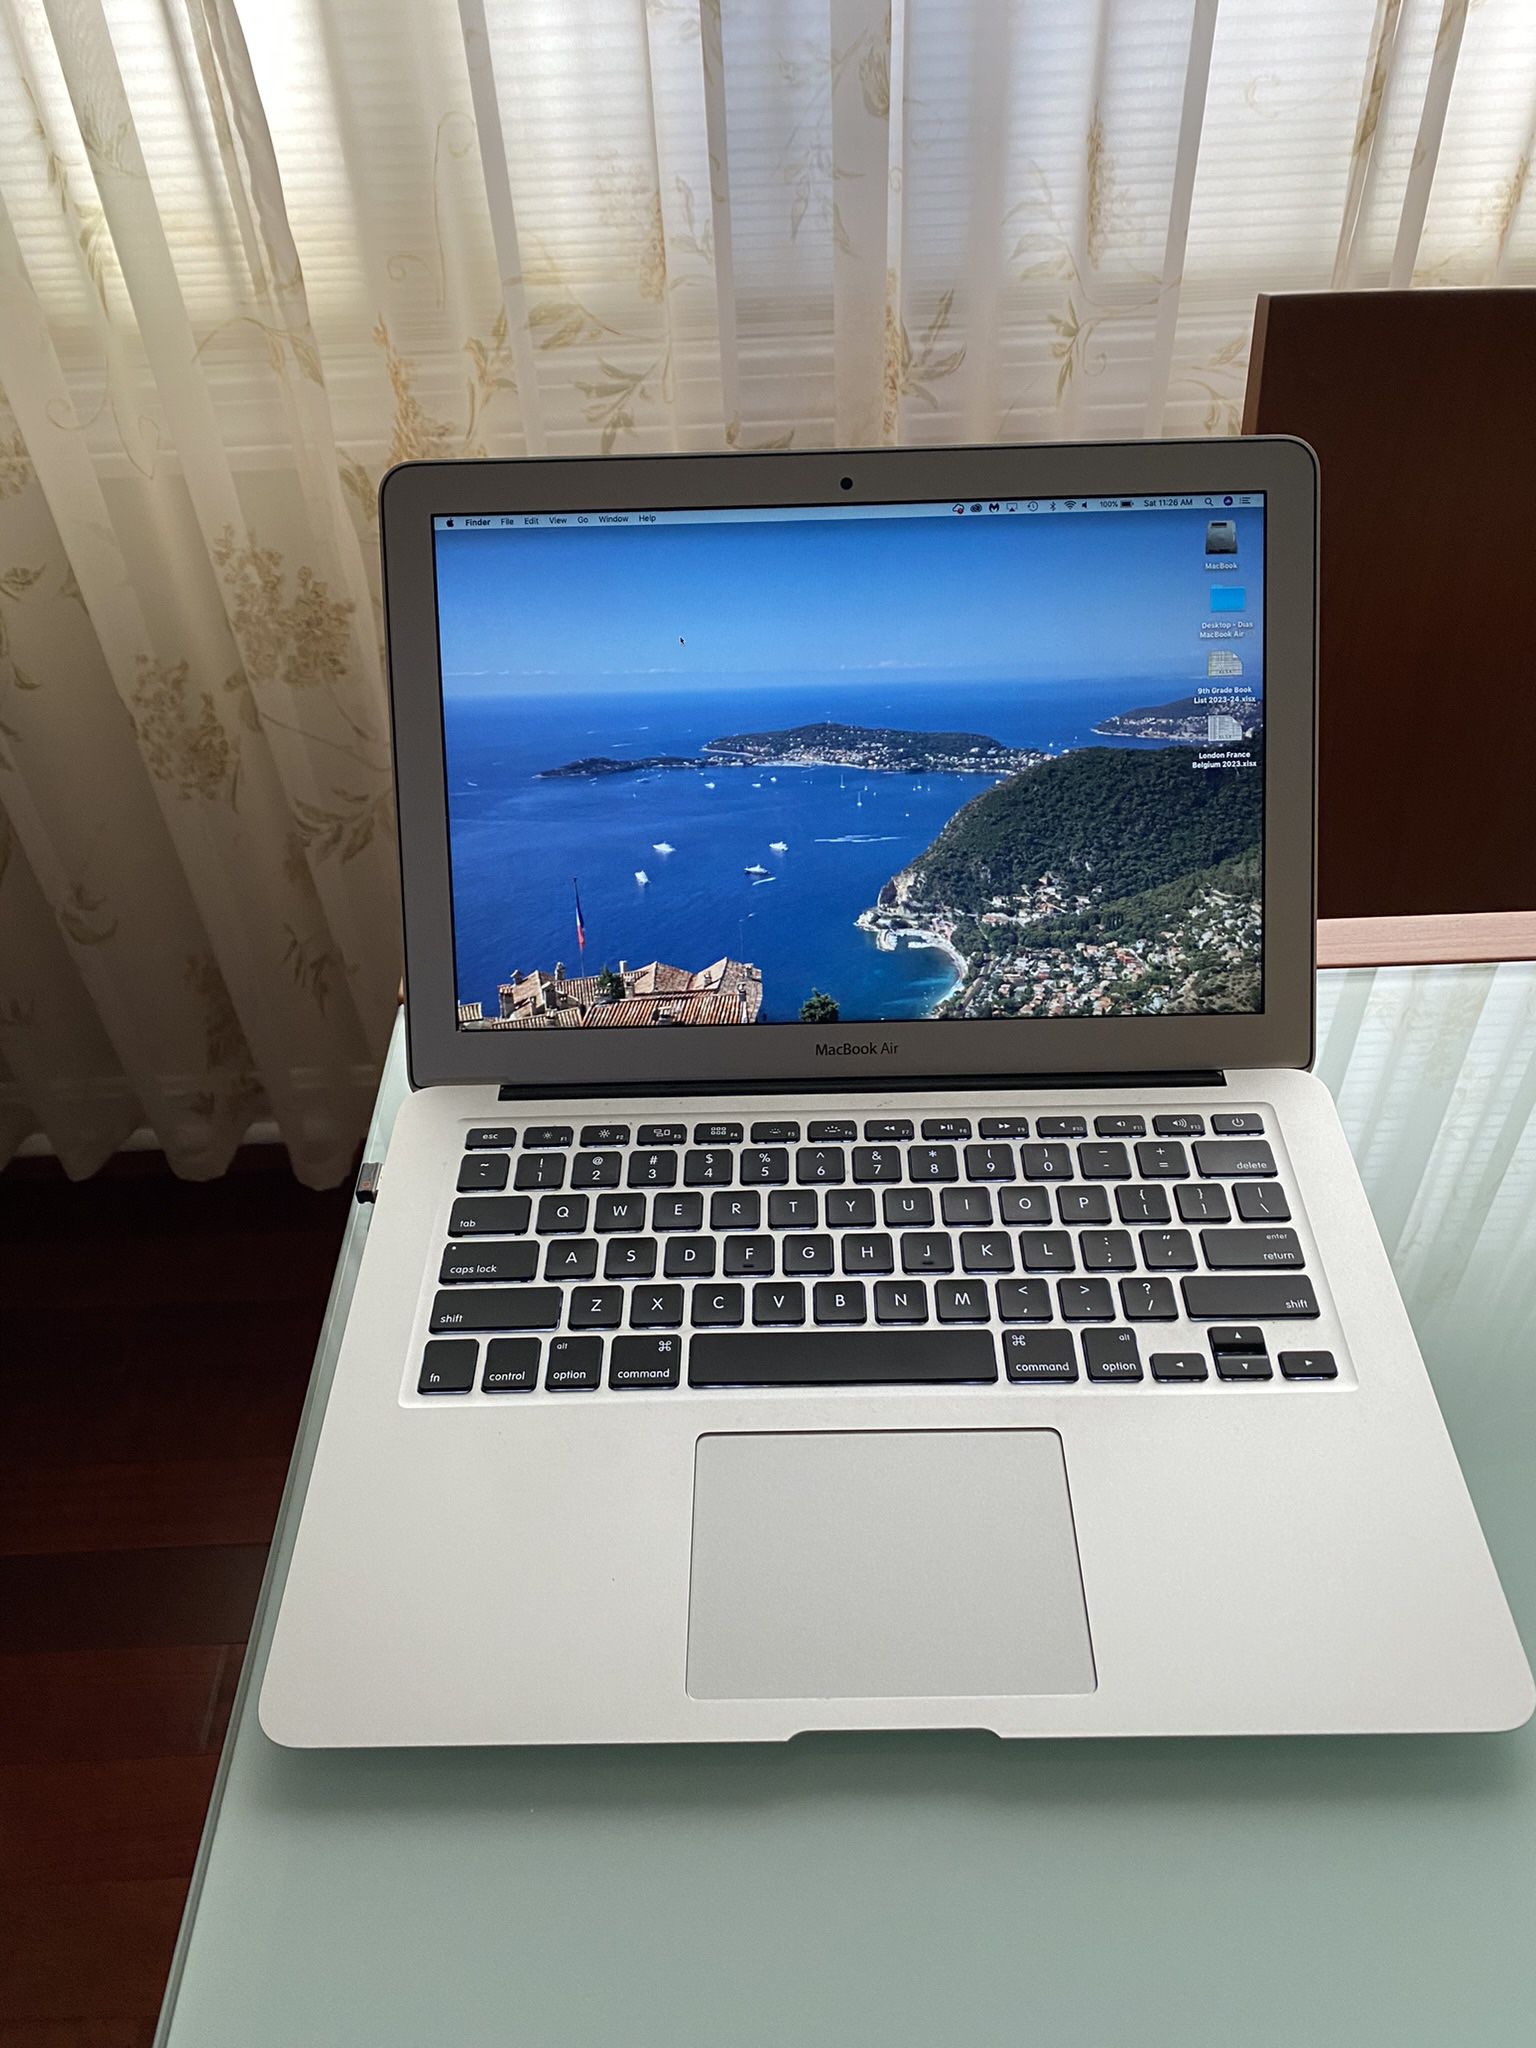 MacBook Air (13 Inch. Mid 2013)